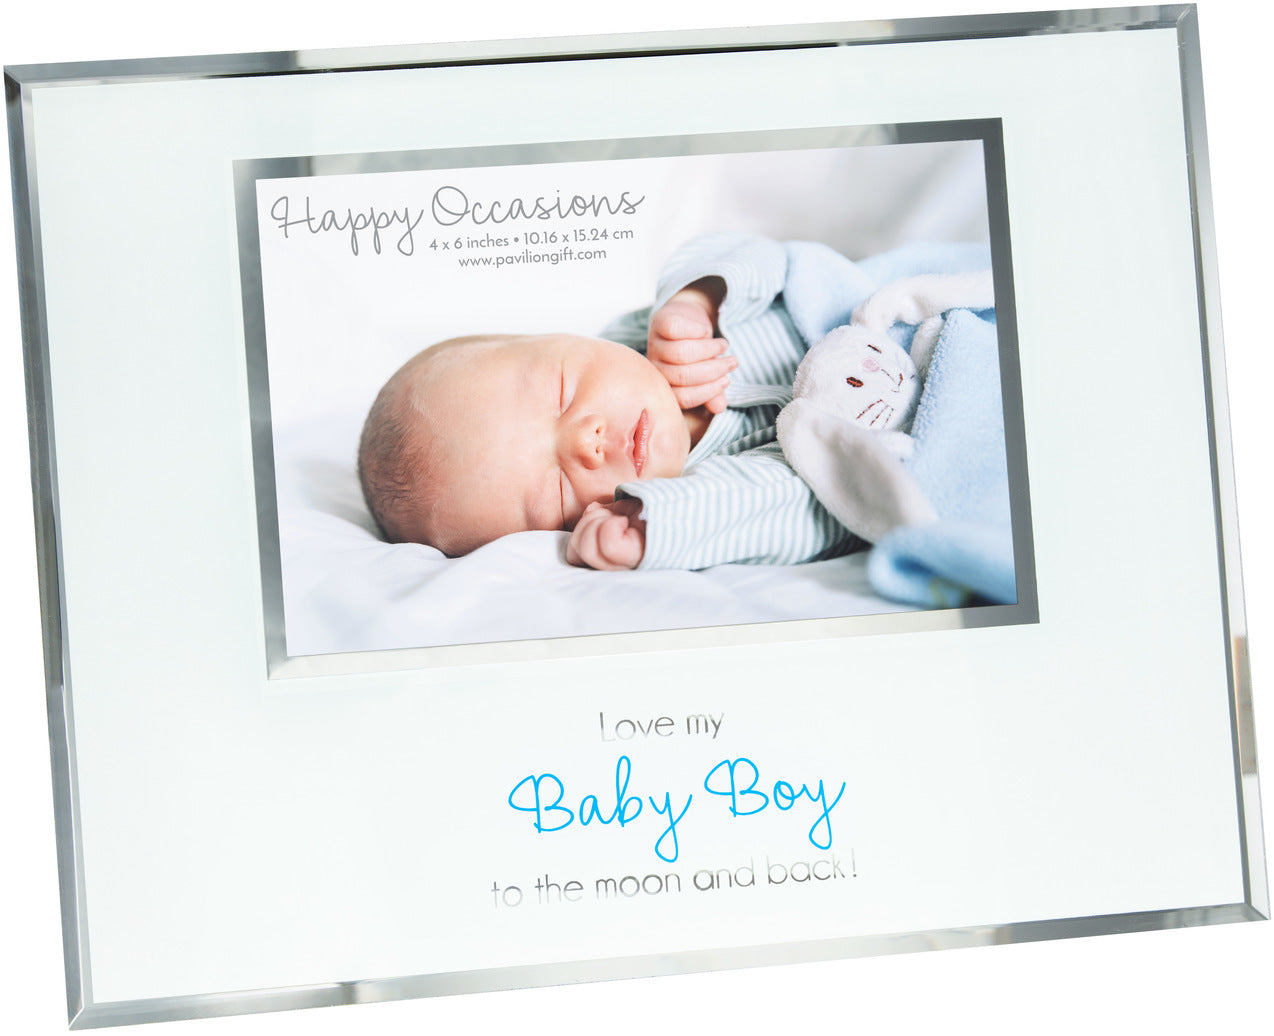 Baby Boy Photo Frame